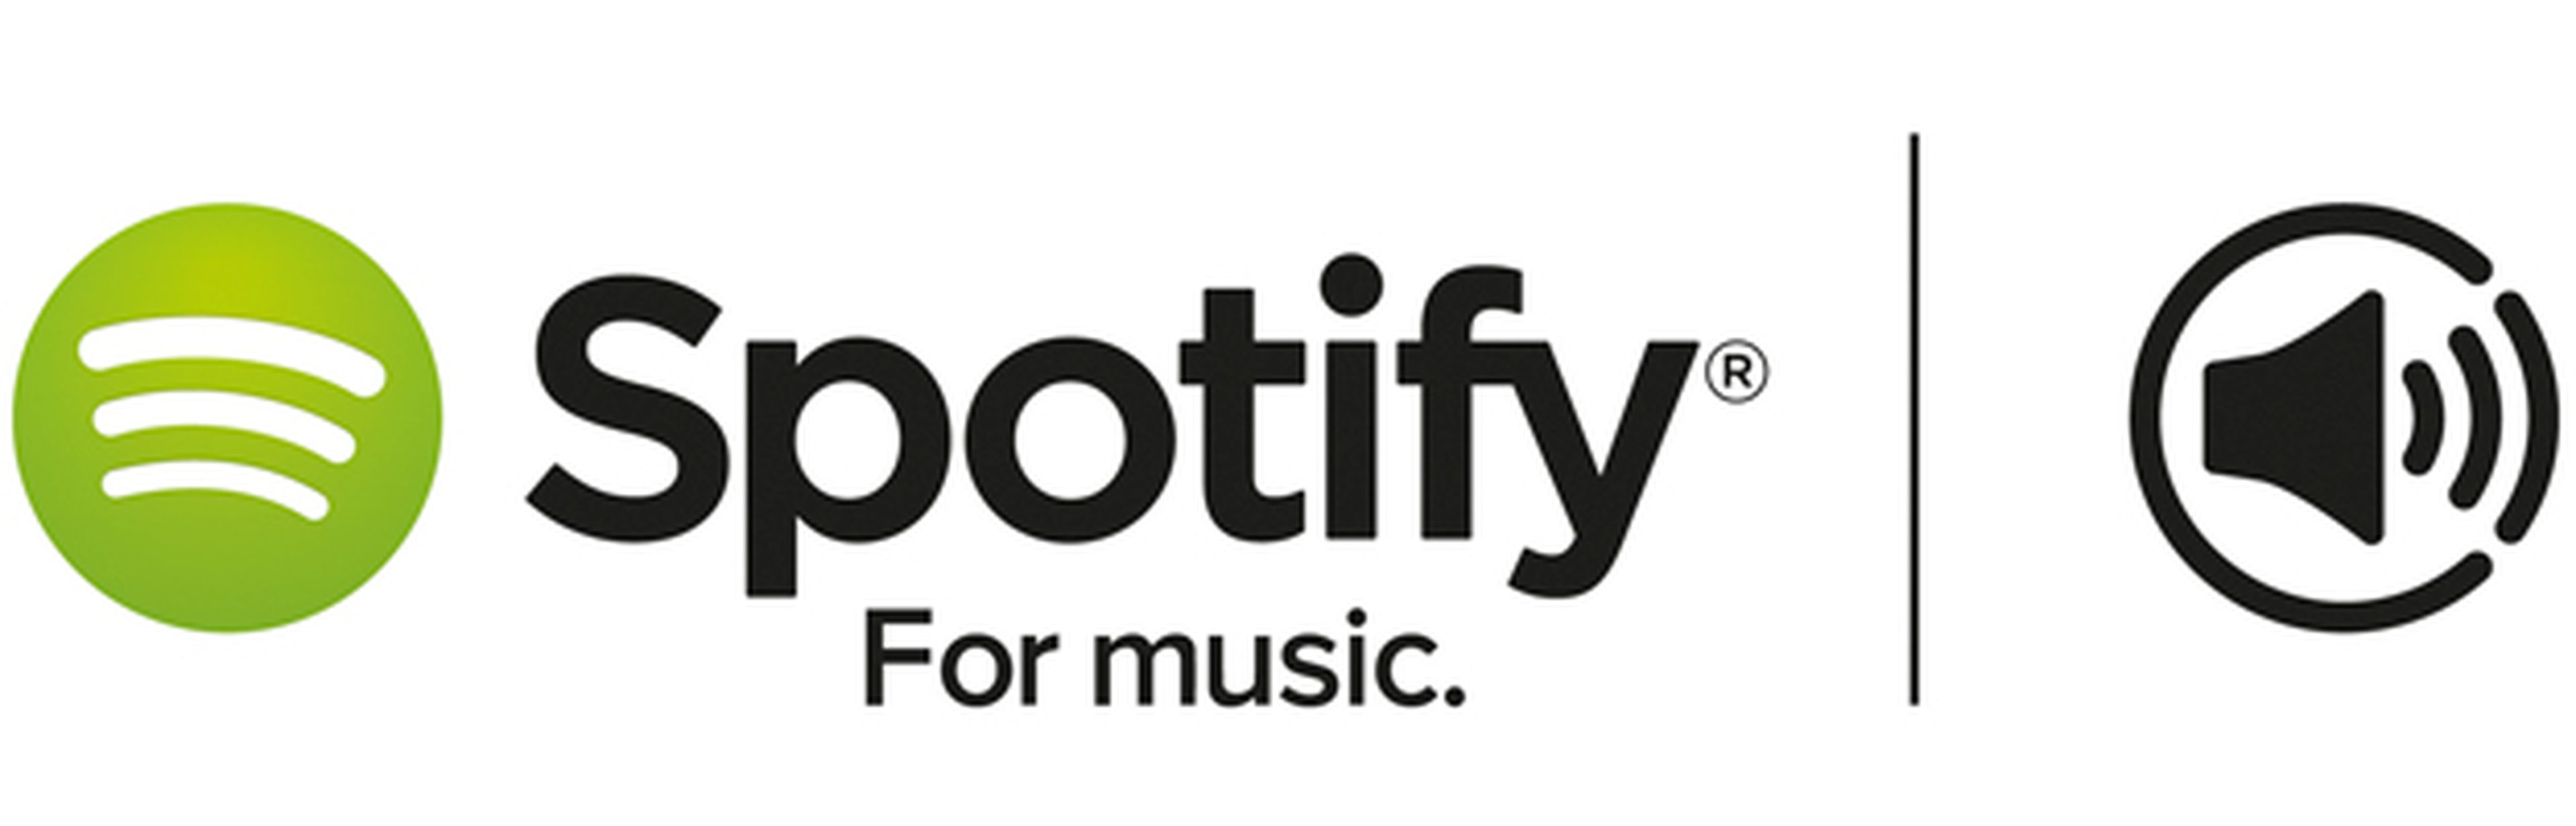 Philips Spotify Multiroom: Spotify por toda la casa